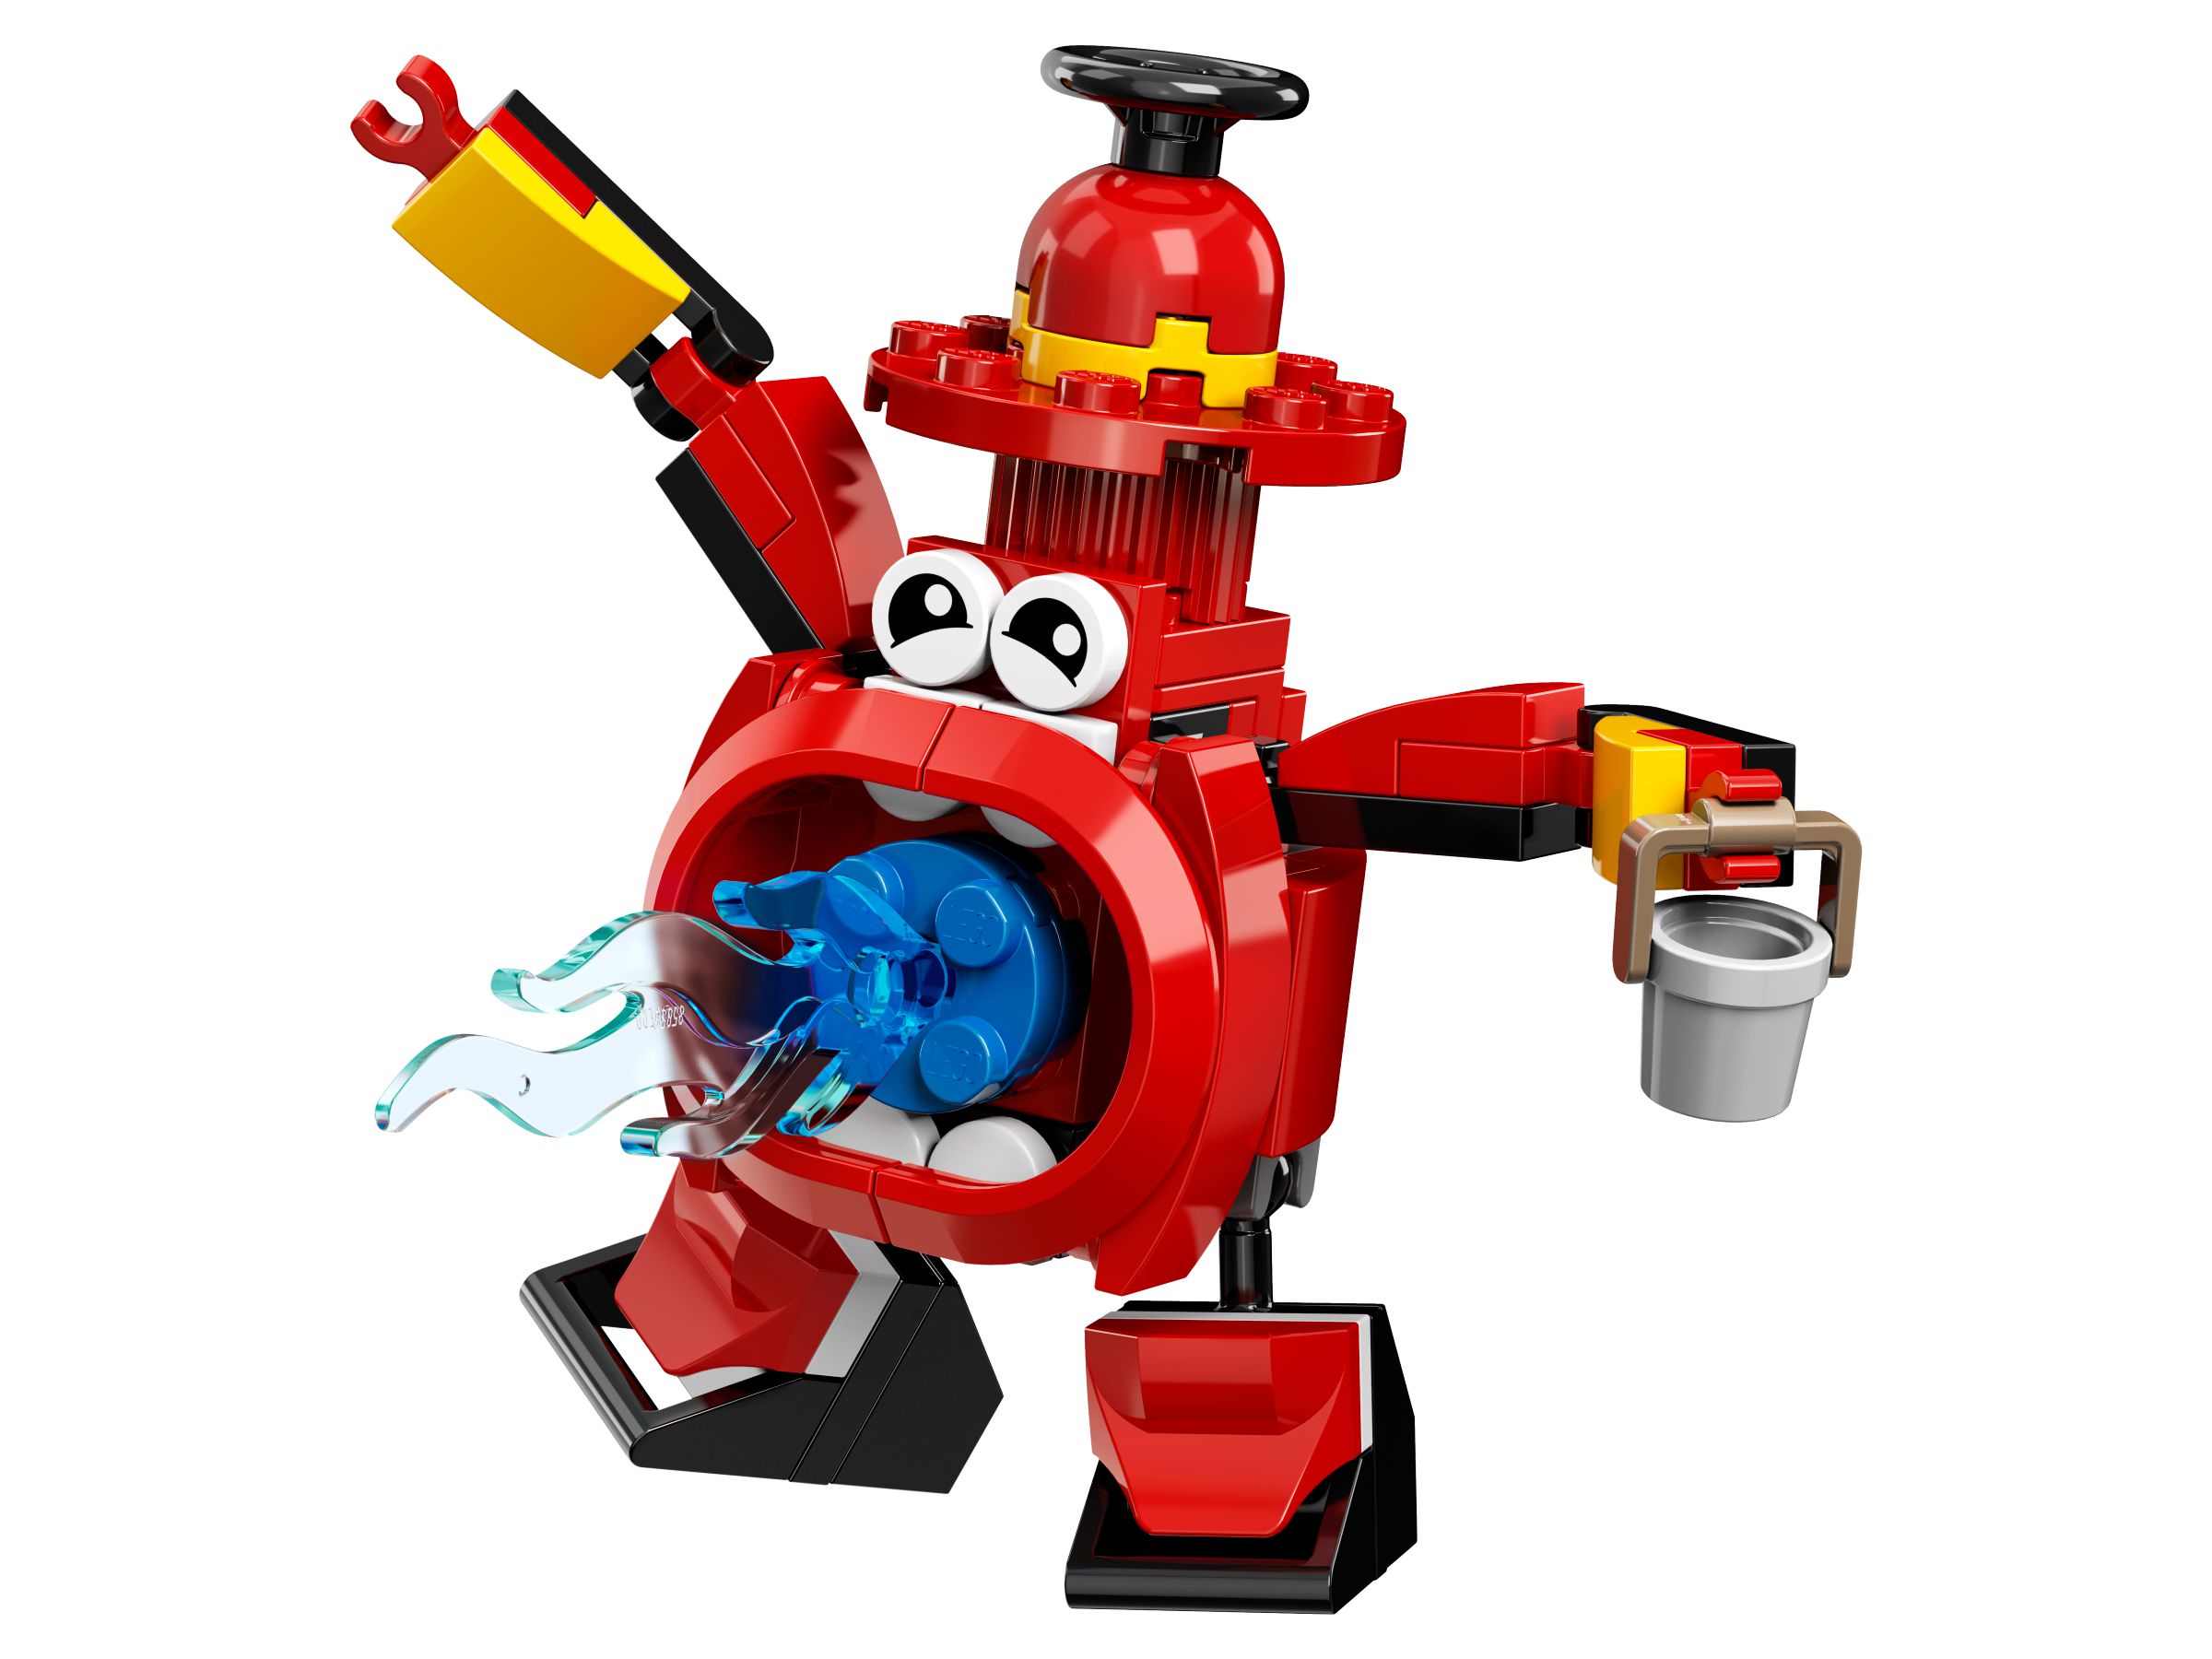 LEGO Mixels 41563 Splasho